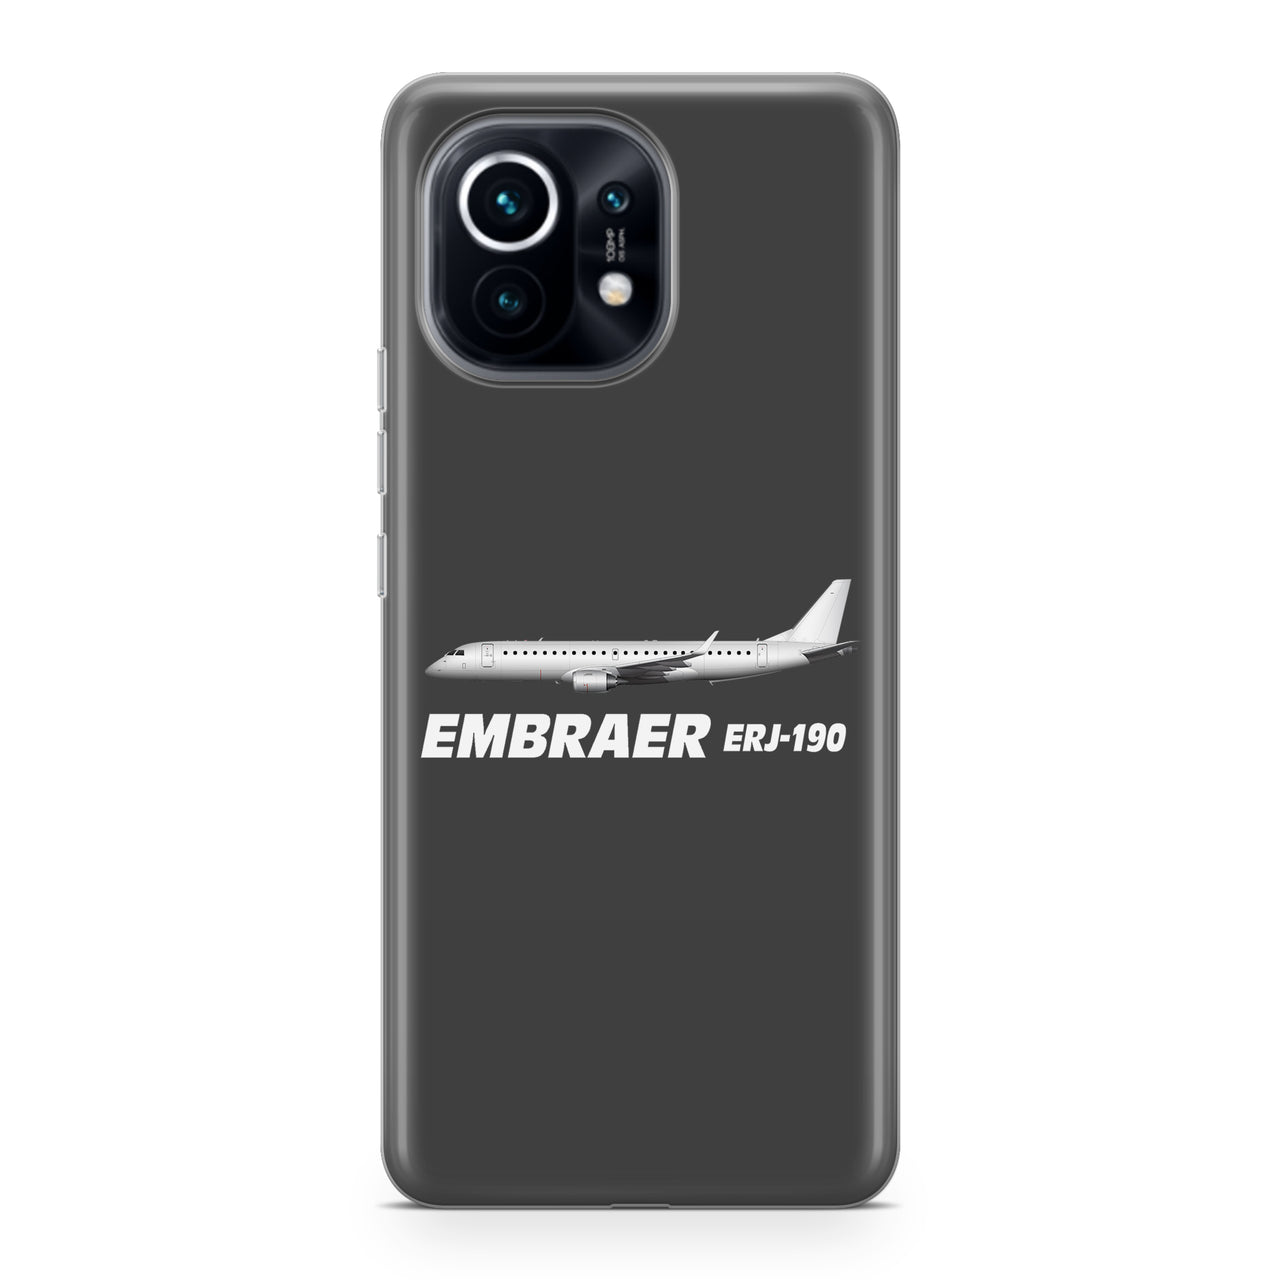 The Embraer ERJ-190 Designed Xiaomi Cases